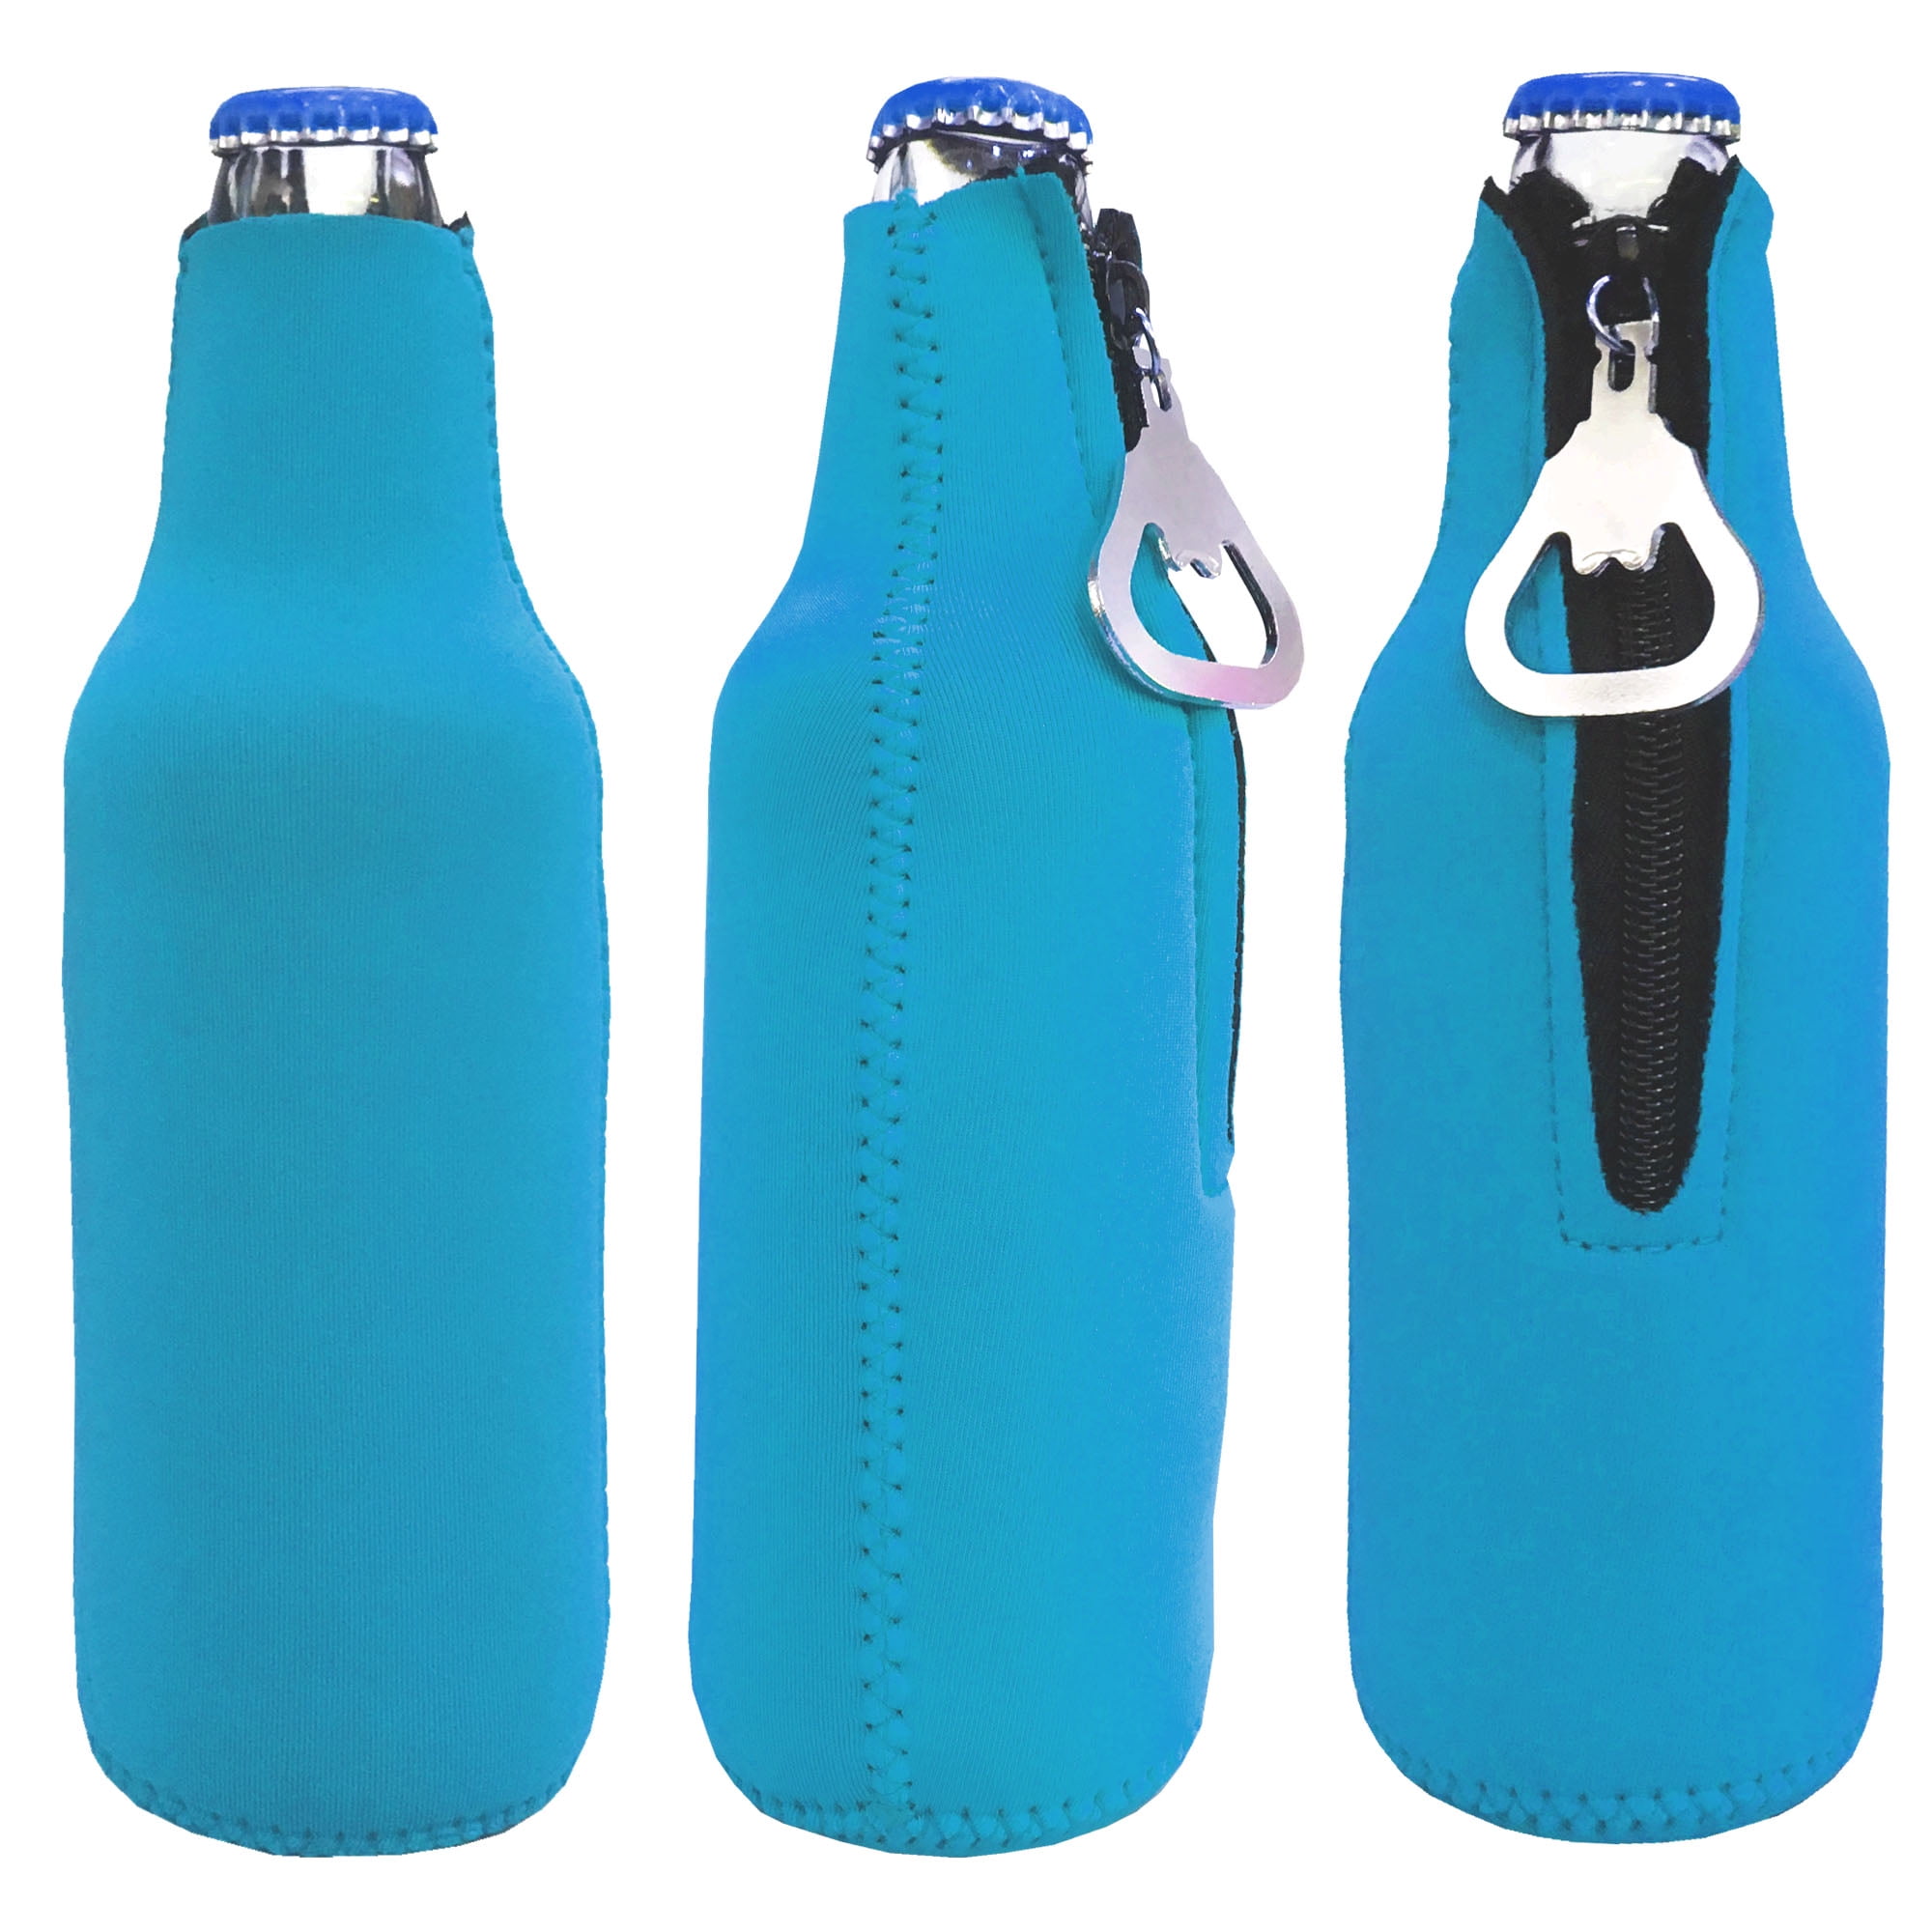 Beer Bottle Coolers with Zipper Premium Neoprene Insulators Orange Blue Green Red Set of 4 Coolie Sleeves Assorted Colors 